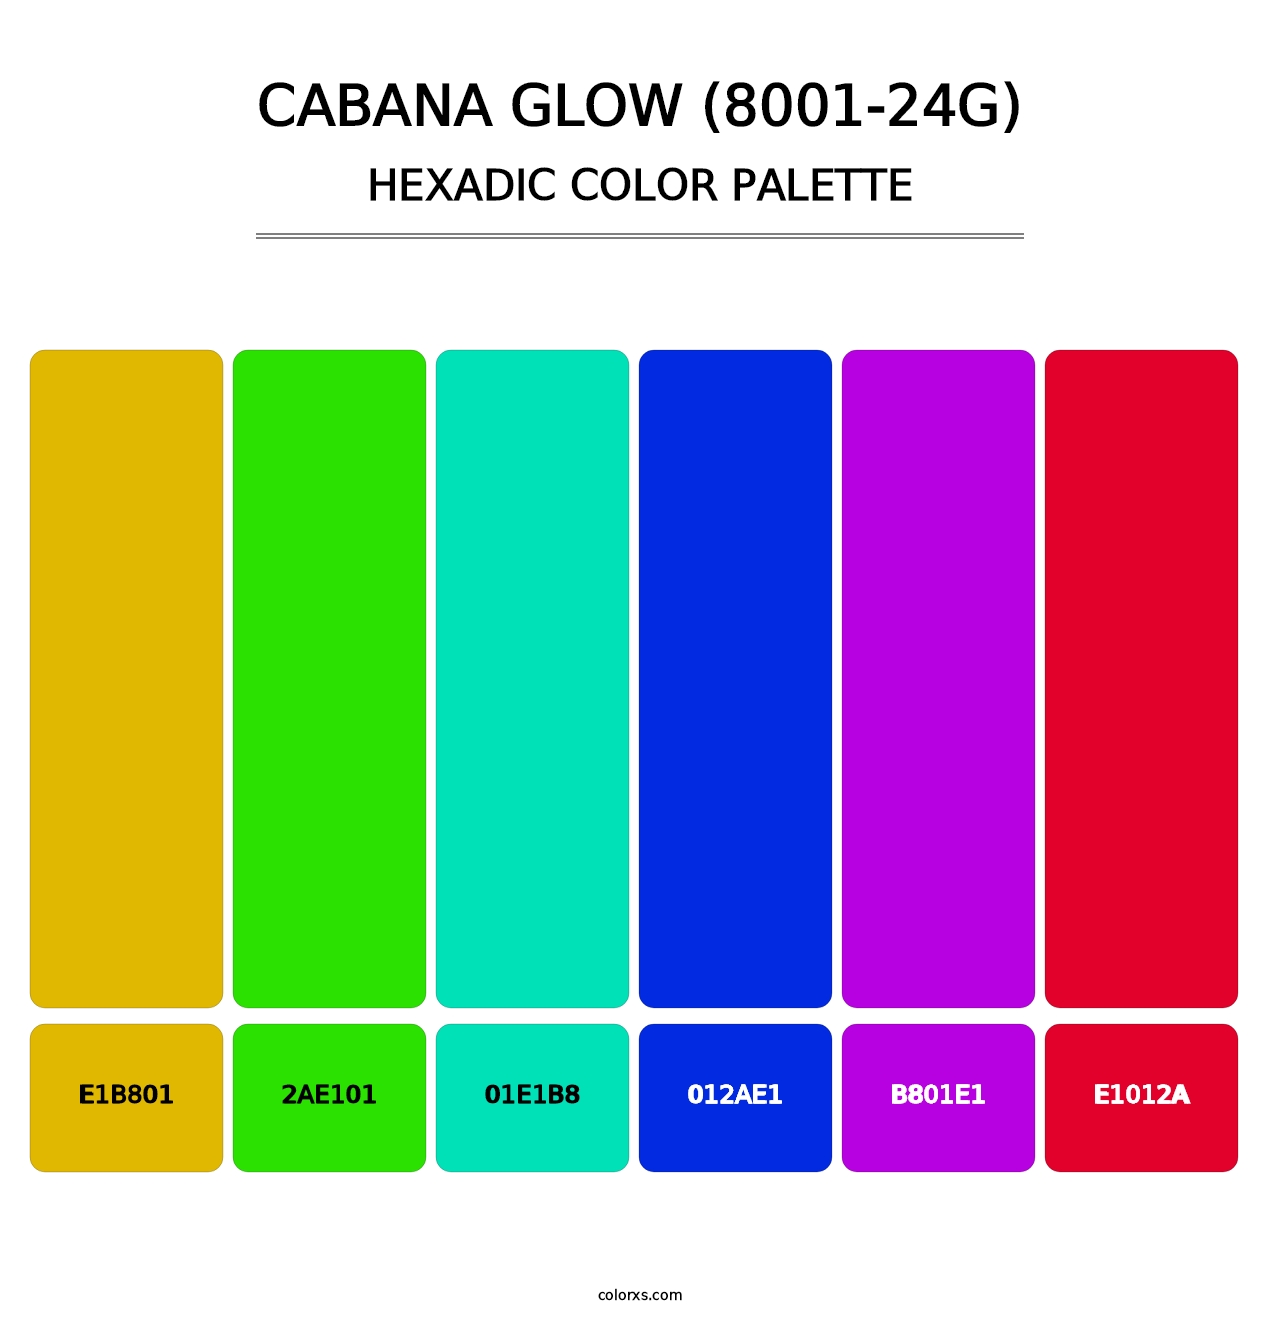 Cabana Glow (8001-24G) - Hexadic Color Palette